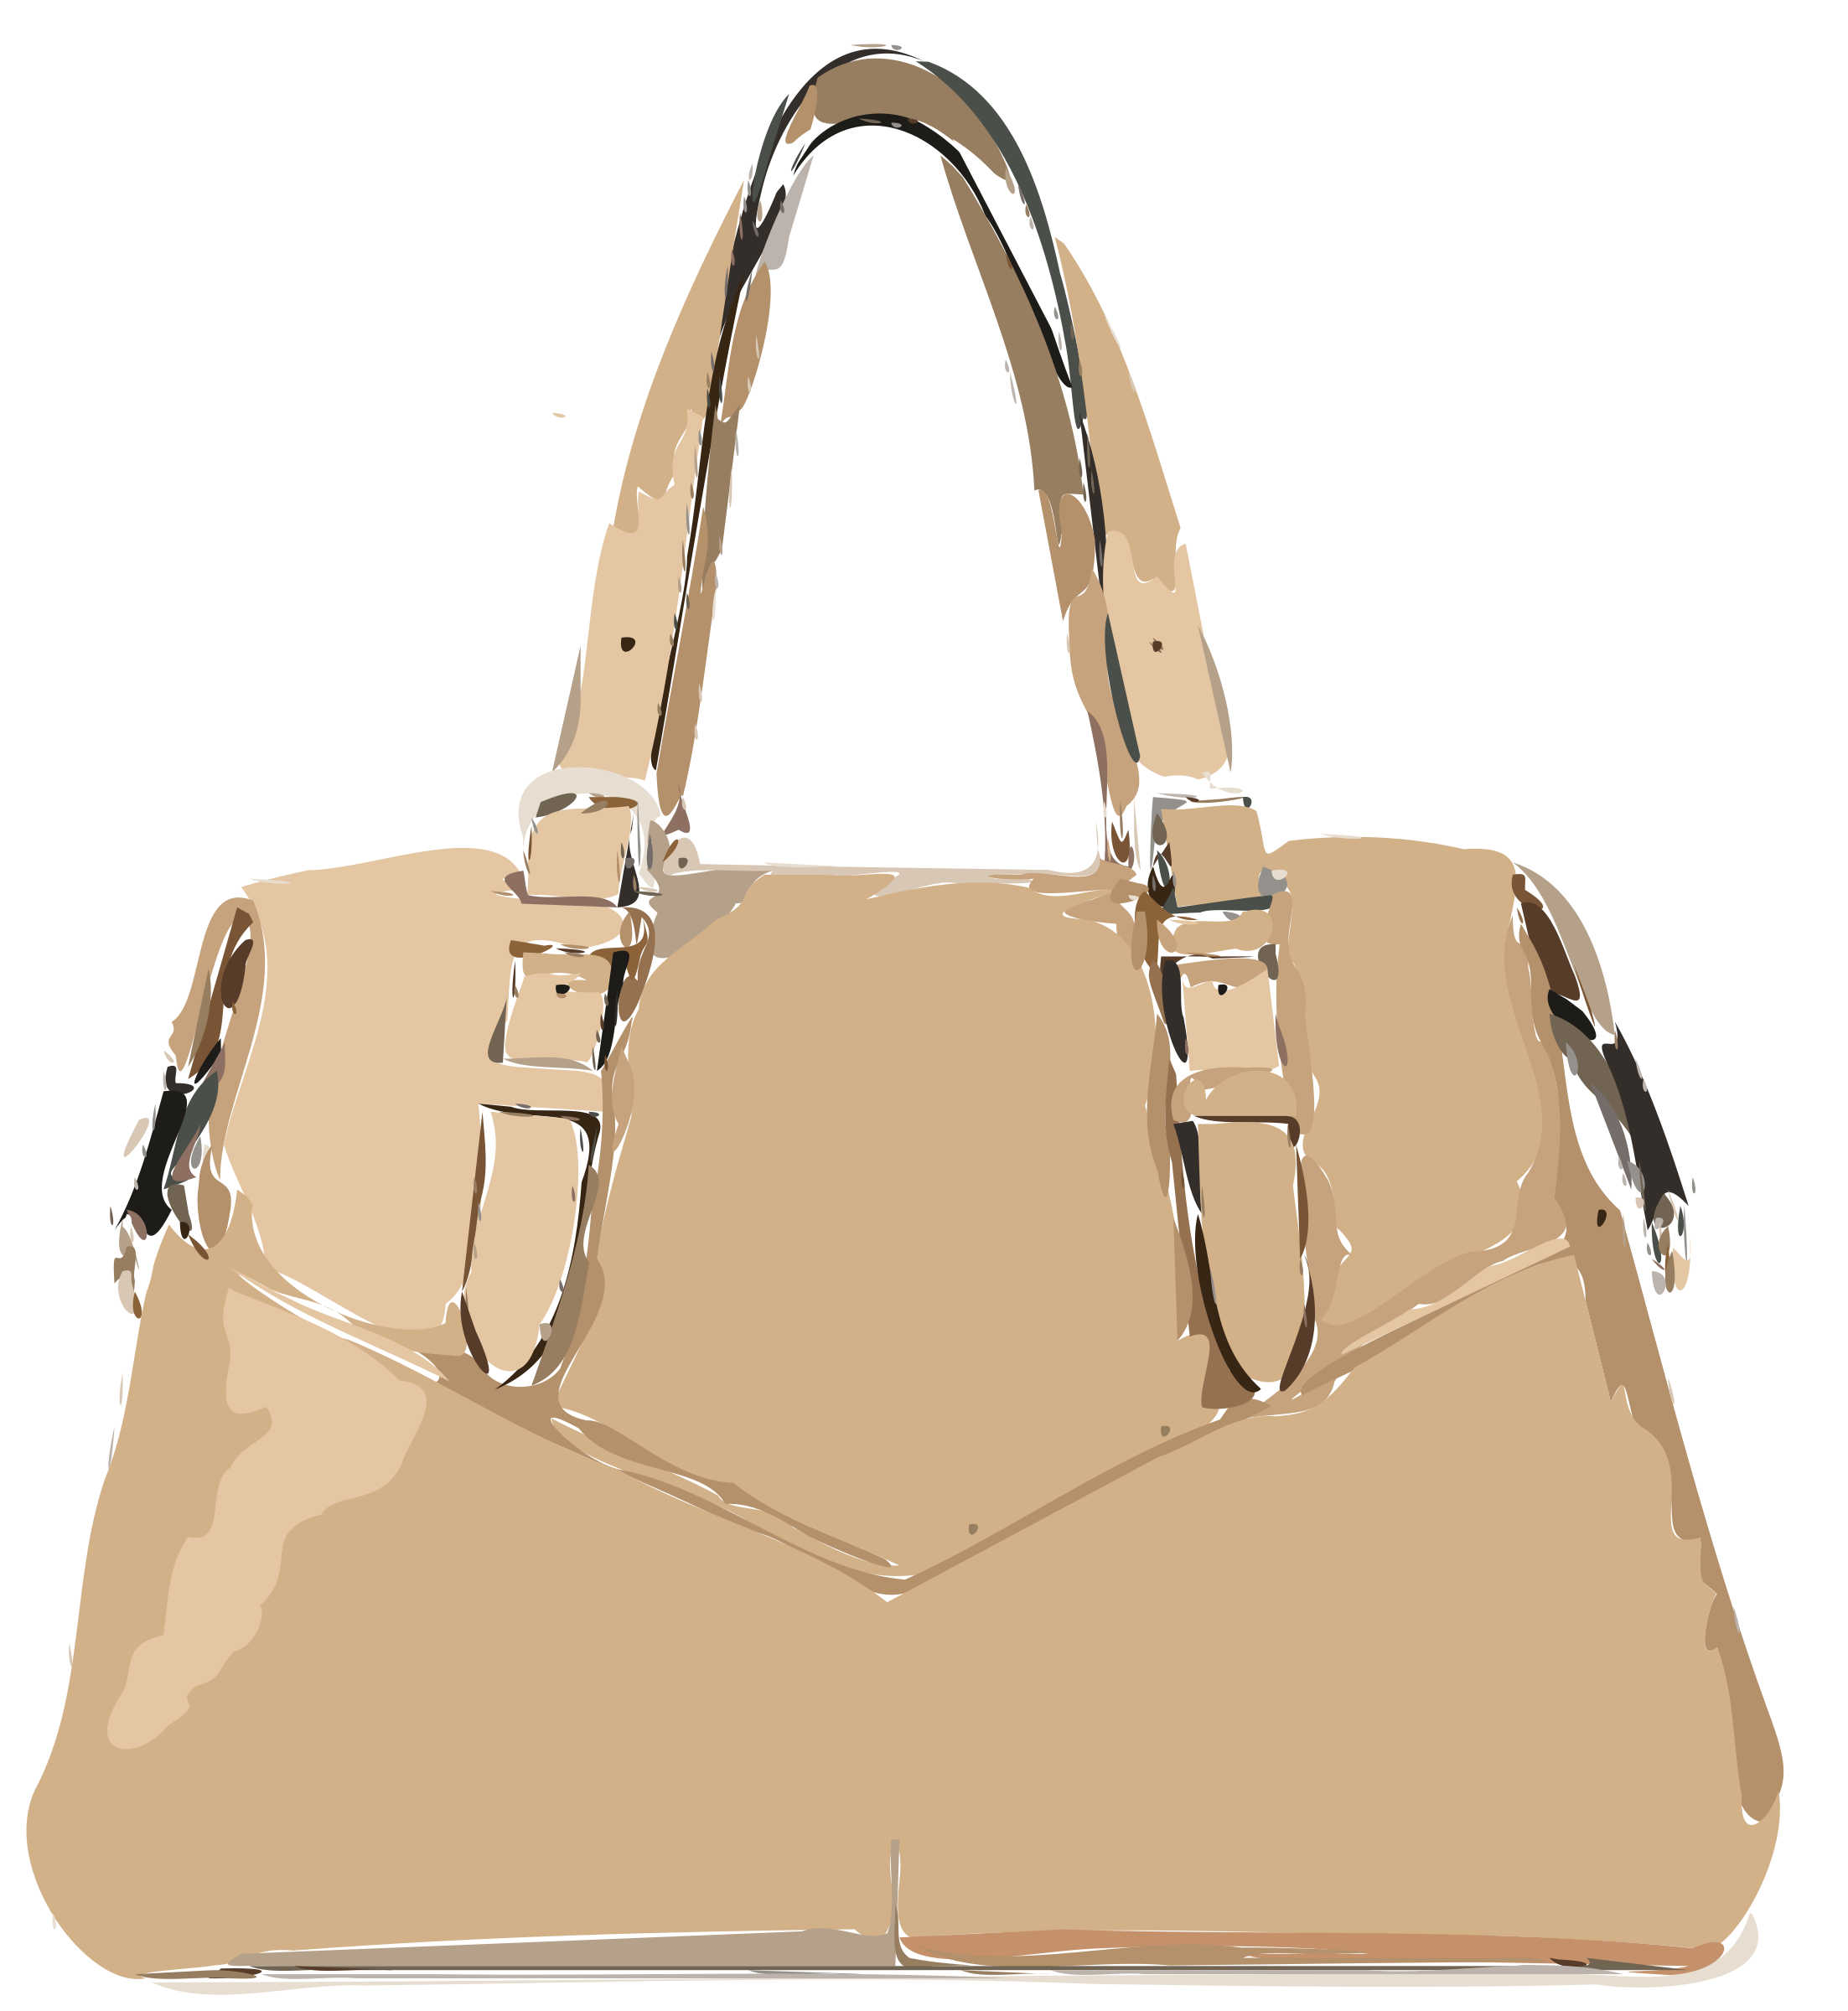 Handbag Leather Tan Tote bag - handbag png download - 2205*2400 - Free ...